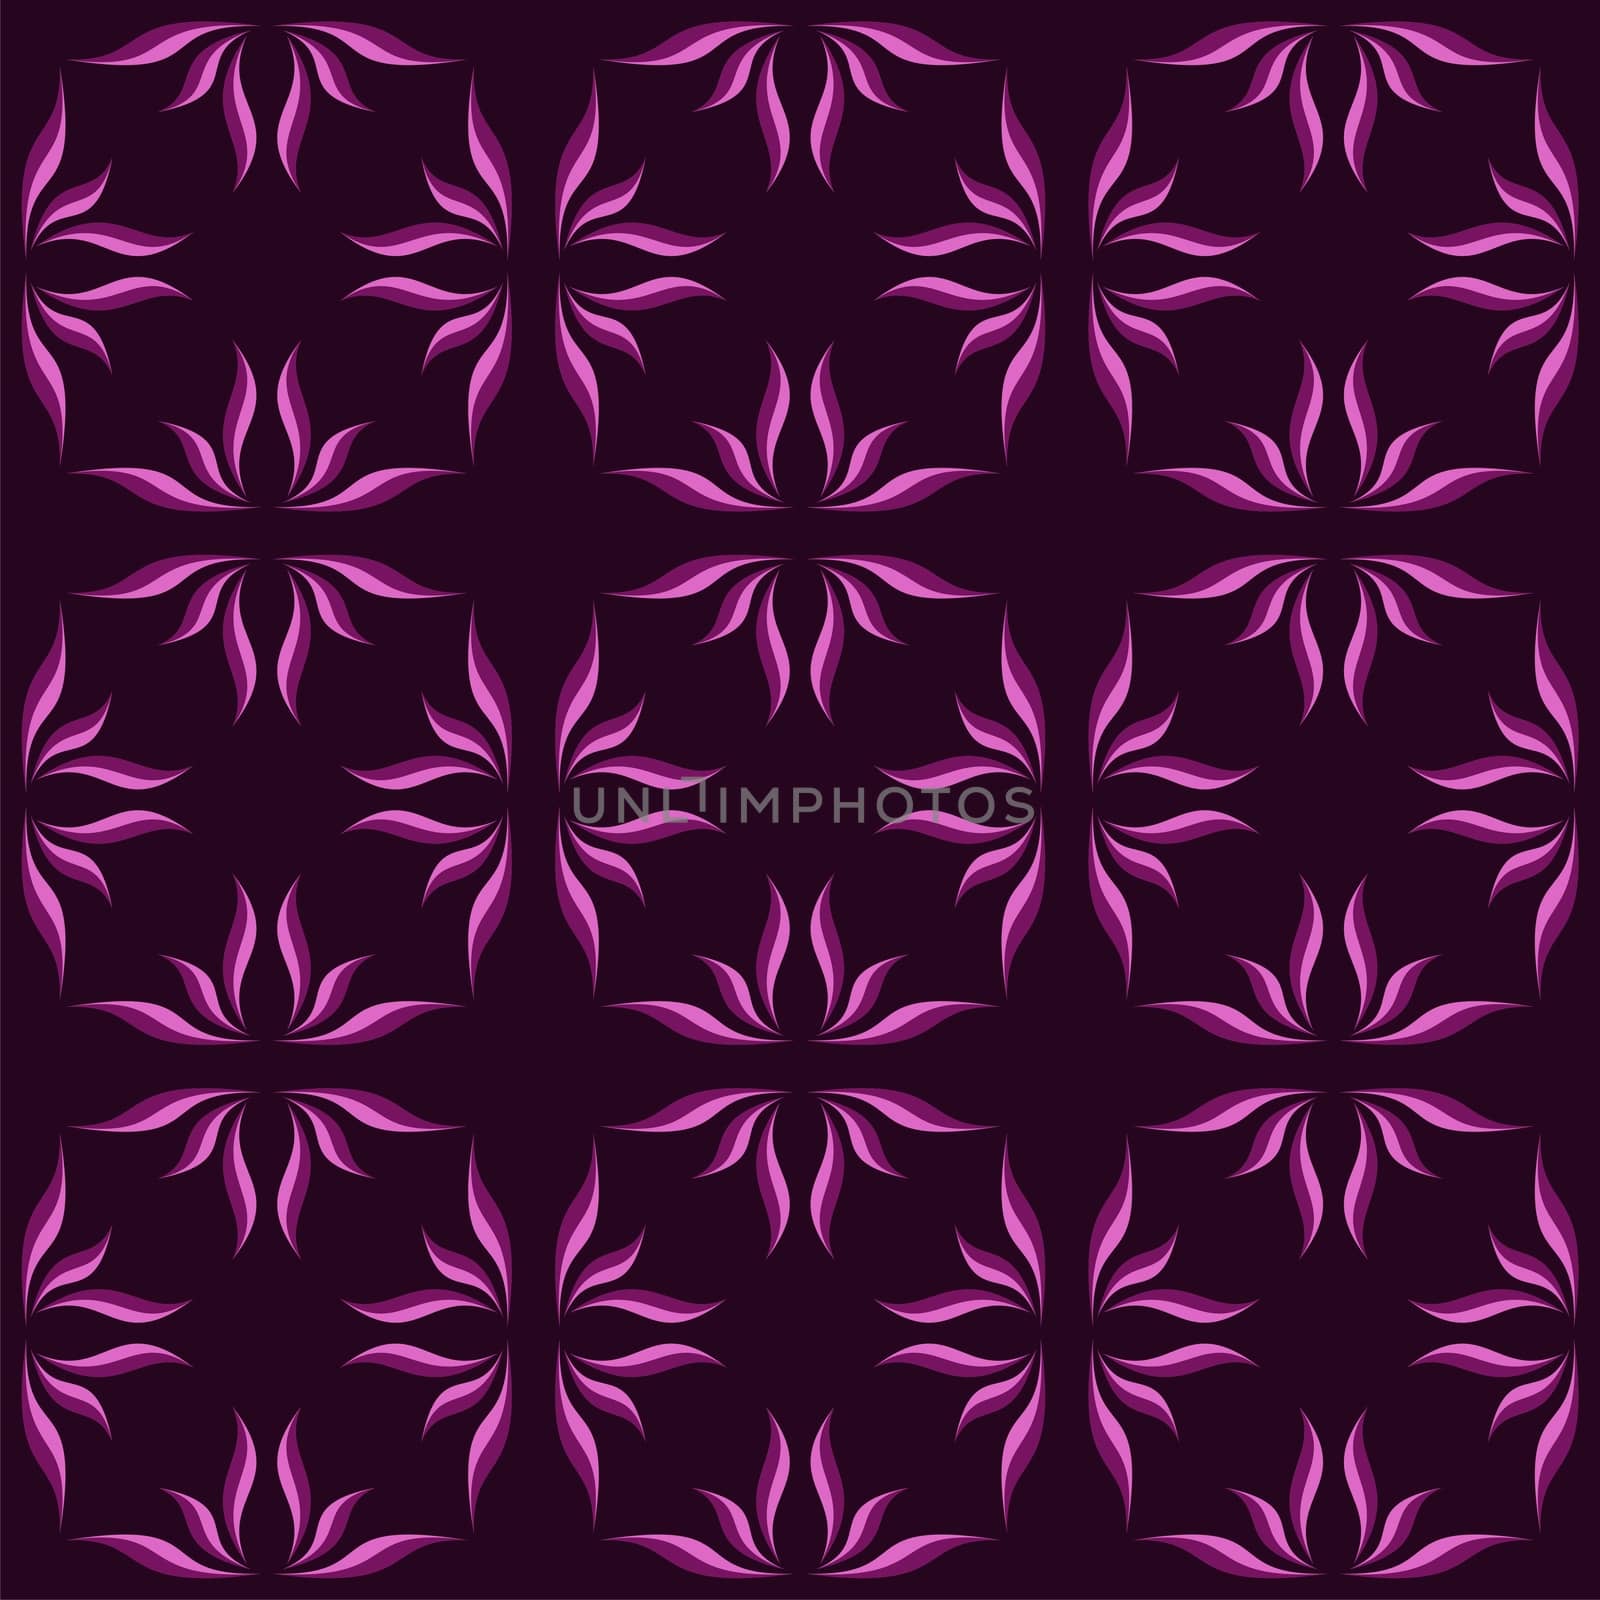 Ethnic Purple Flower Star Seamless Pattern illustration design EPS 10